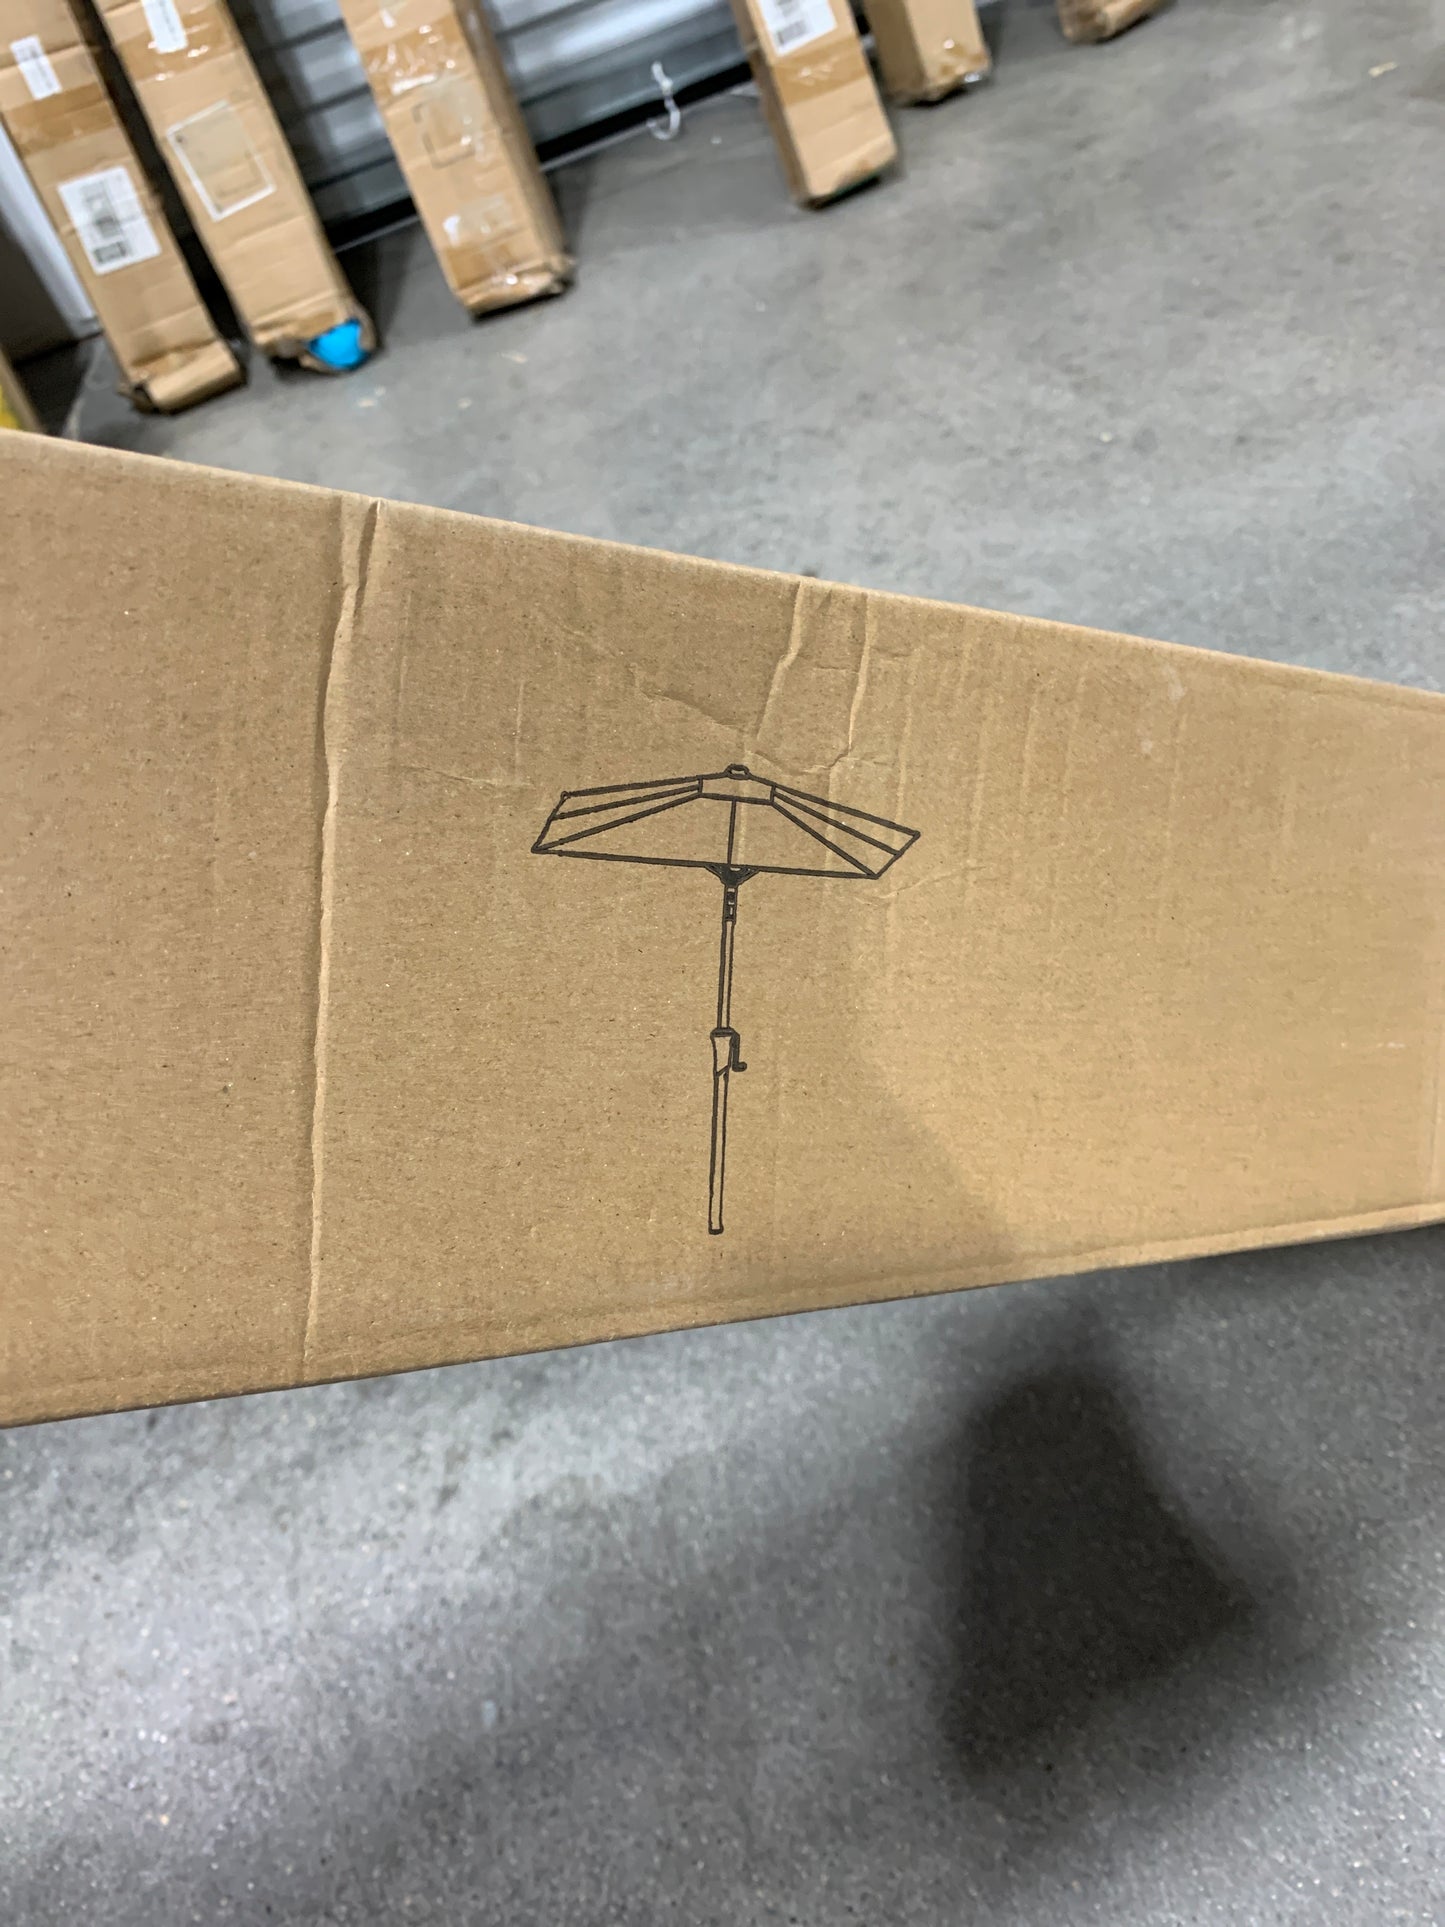 FLAME&SHADE 6.5 x 10 ft Rectangular Outdoor Umbrella Patio Table and Market Umbrella with Push Button Tilt